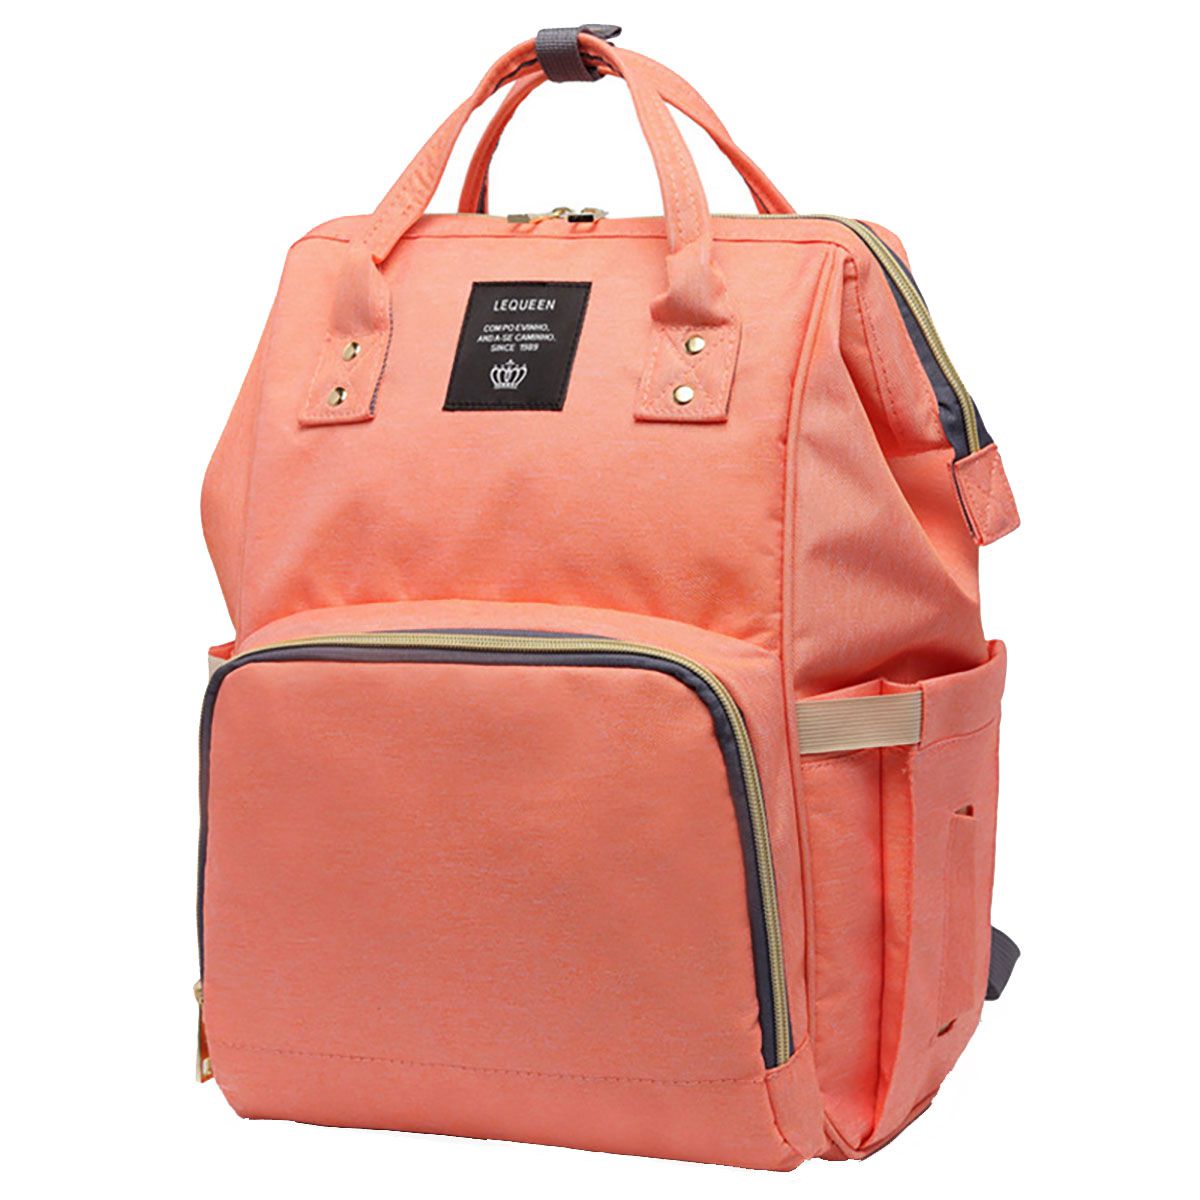 Best for Traveling: Vibiger Multifunction Waterproof Travel Backpack